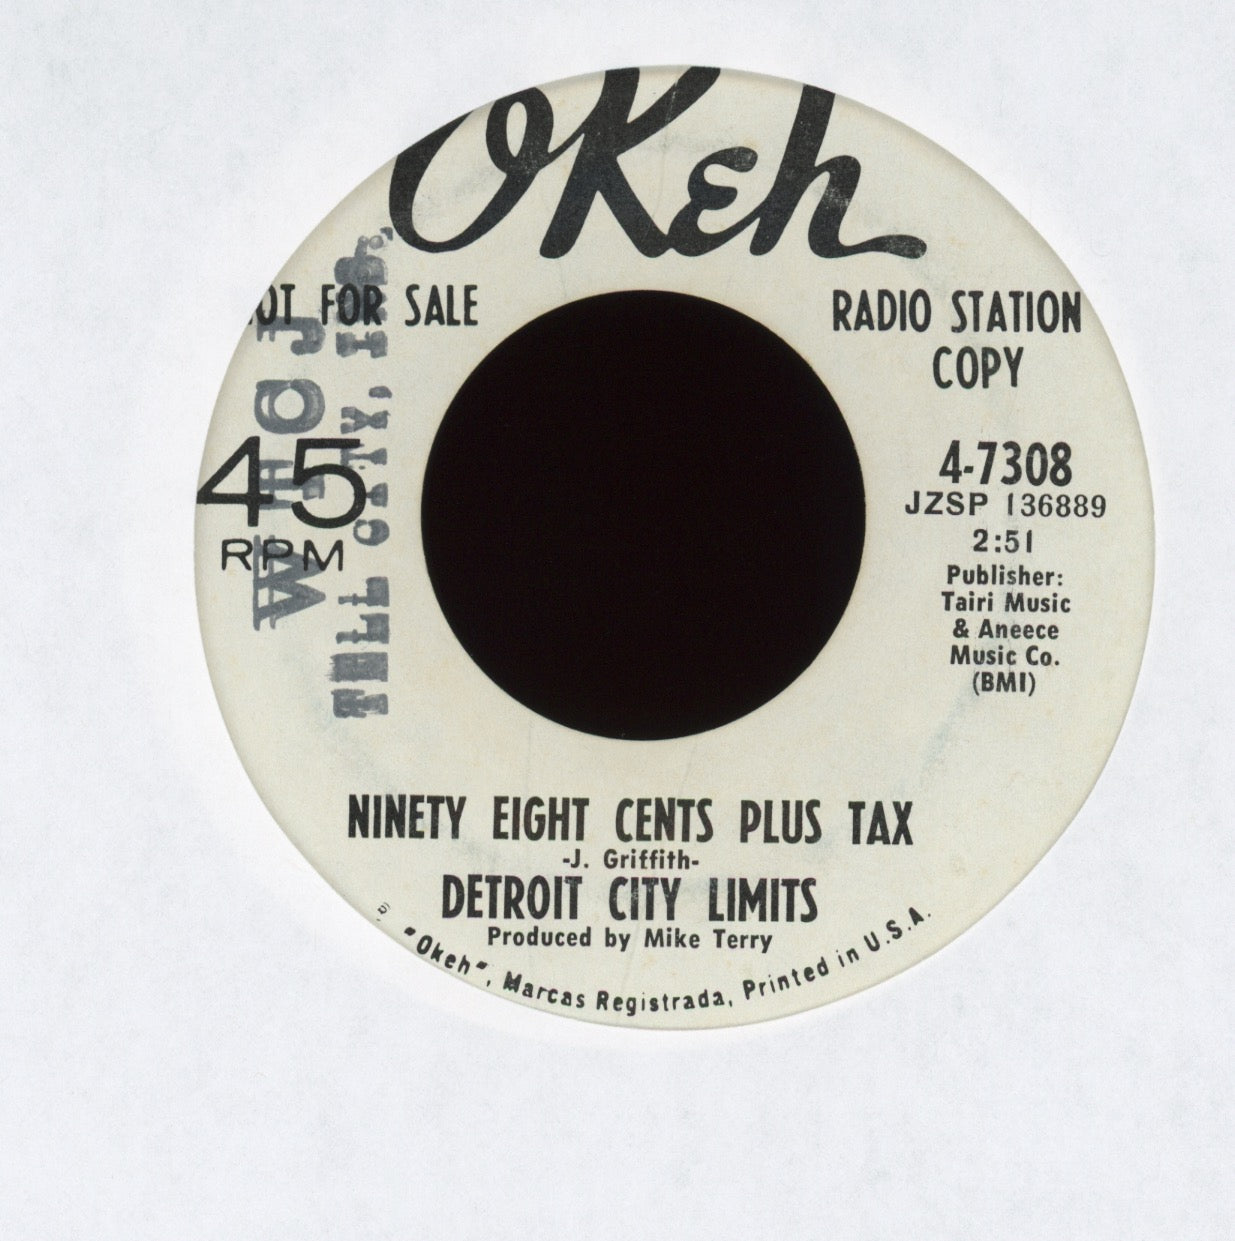 Detroit City Limits - Ninety Eight Cents Plus Tax on Okeh Promo Funk 45